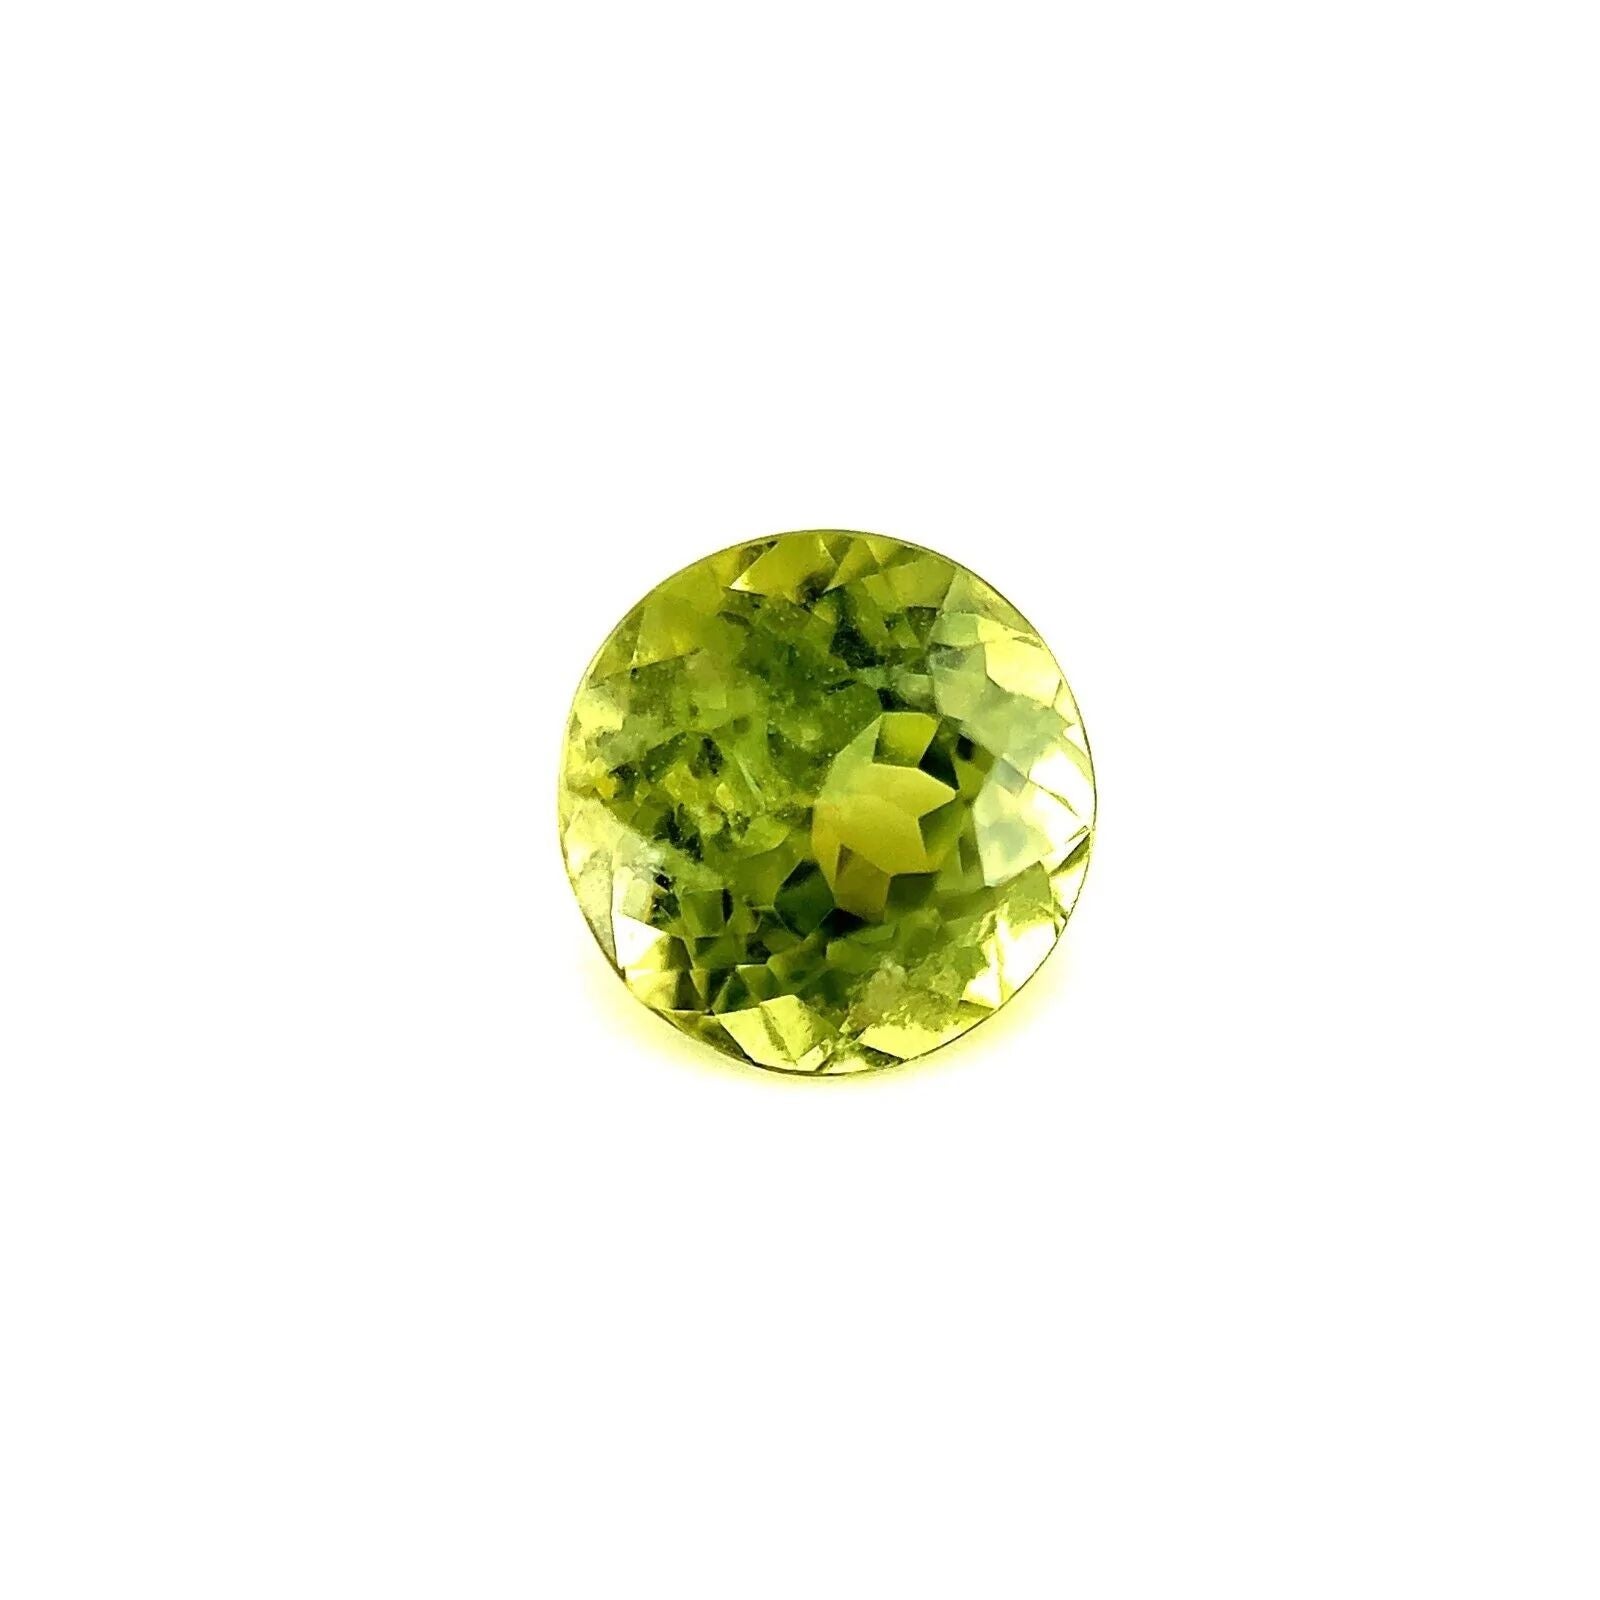 Vivid Yellow Green Sapphire 1.58ct Round Brilliant Cut Loose Gemstone For Sale